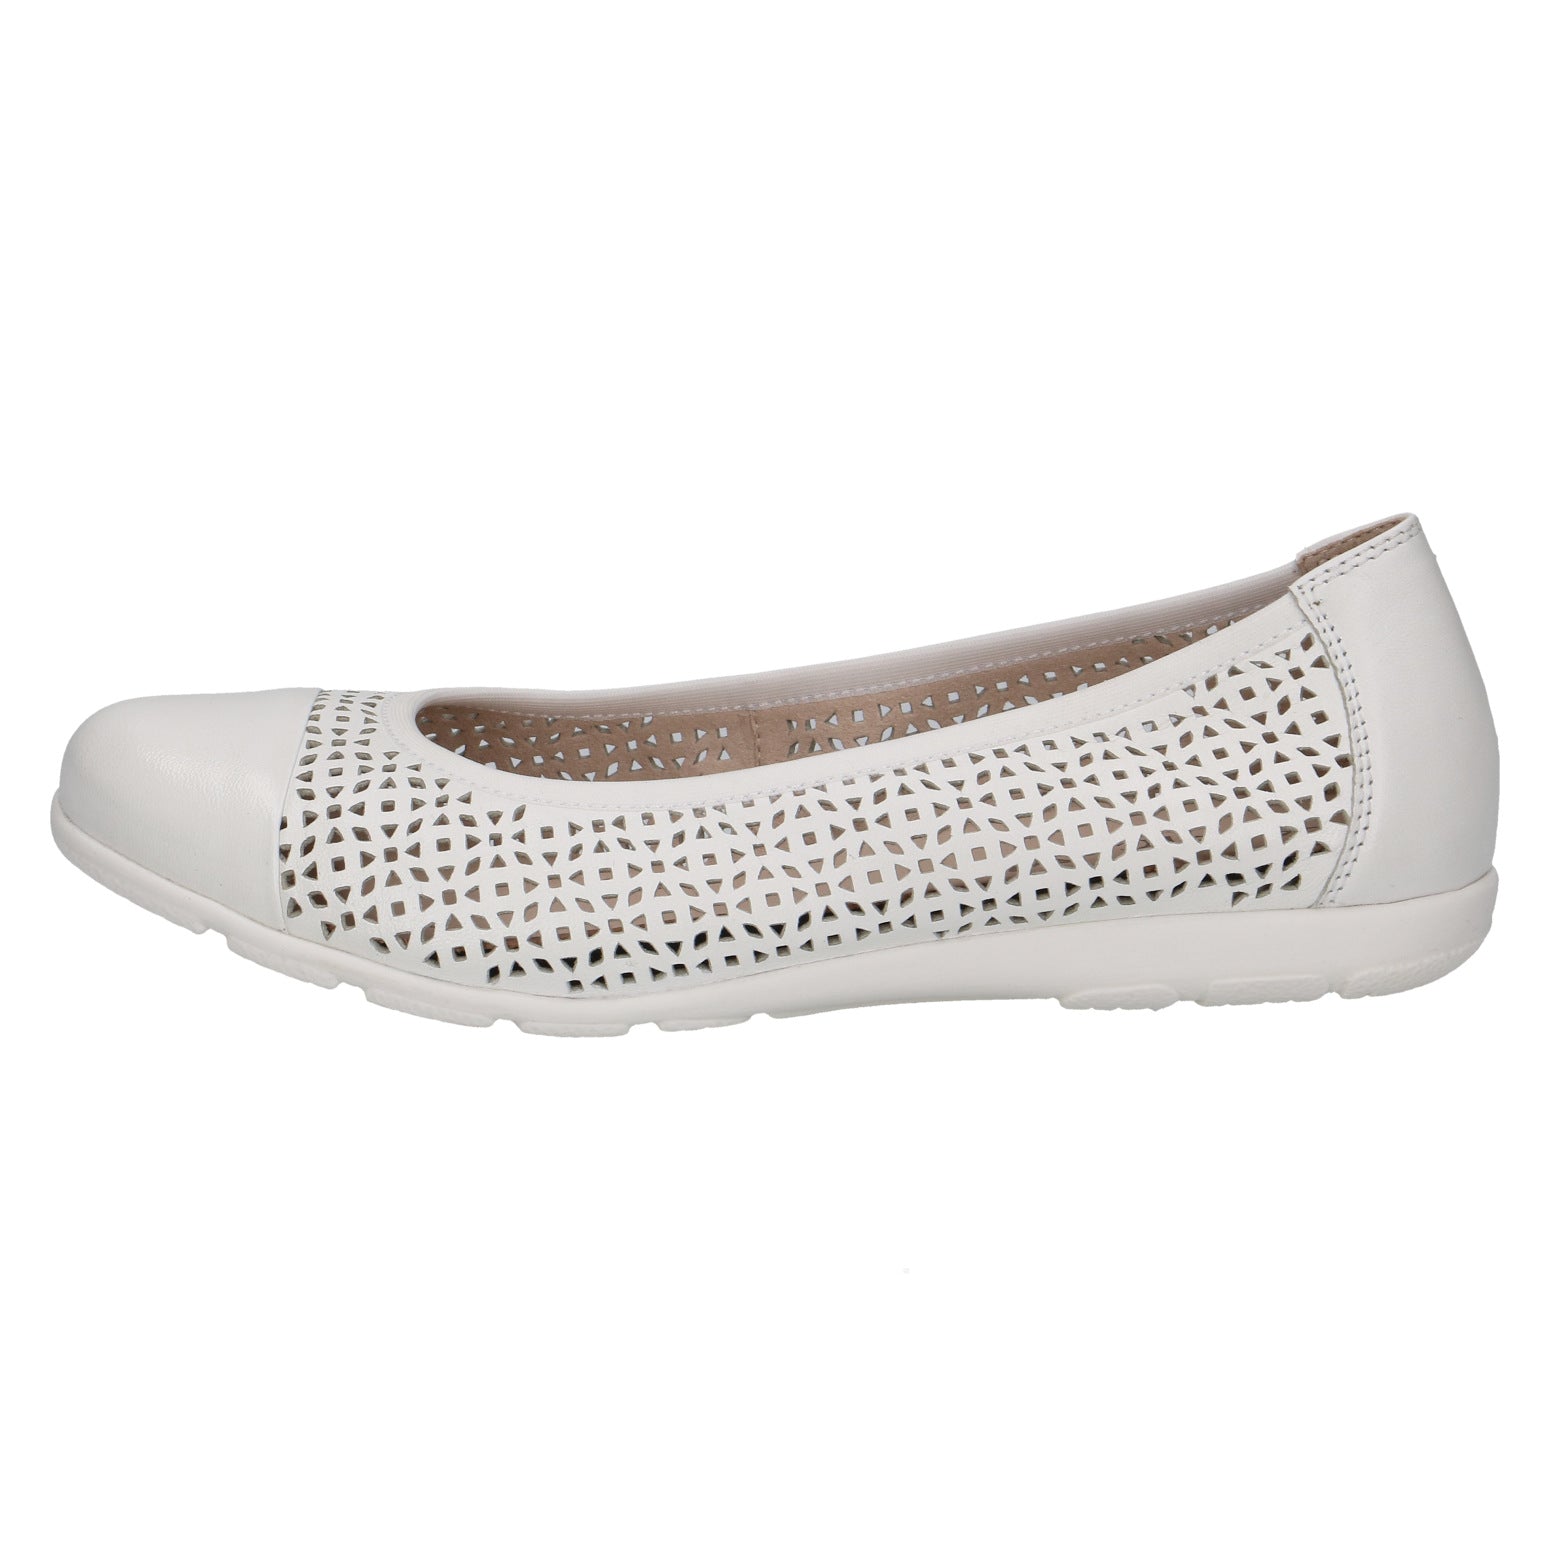 Caprice 9-22151-42 160 Ladies White Leather Slip On Shoes